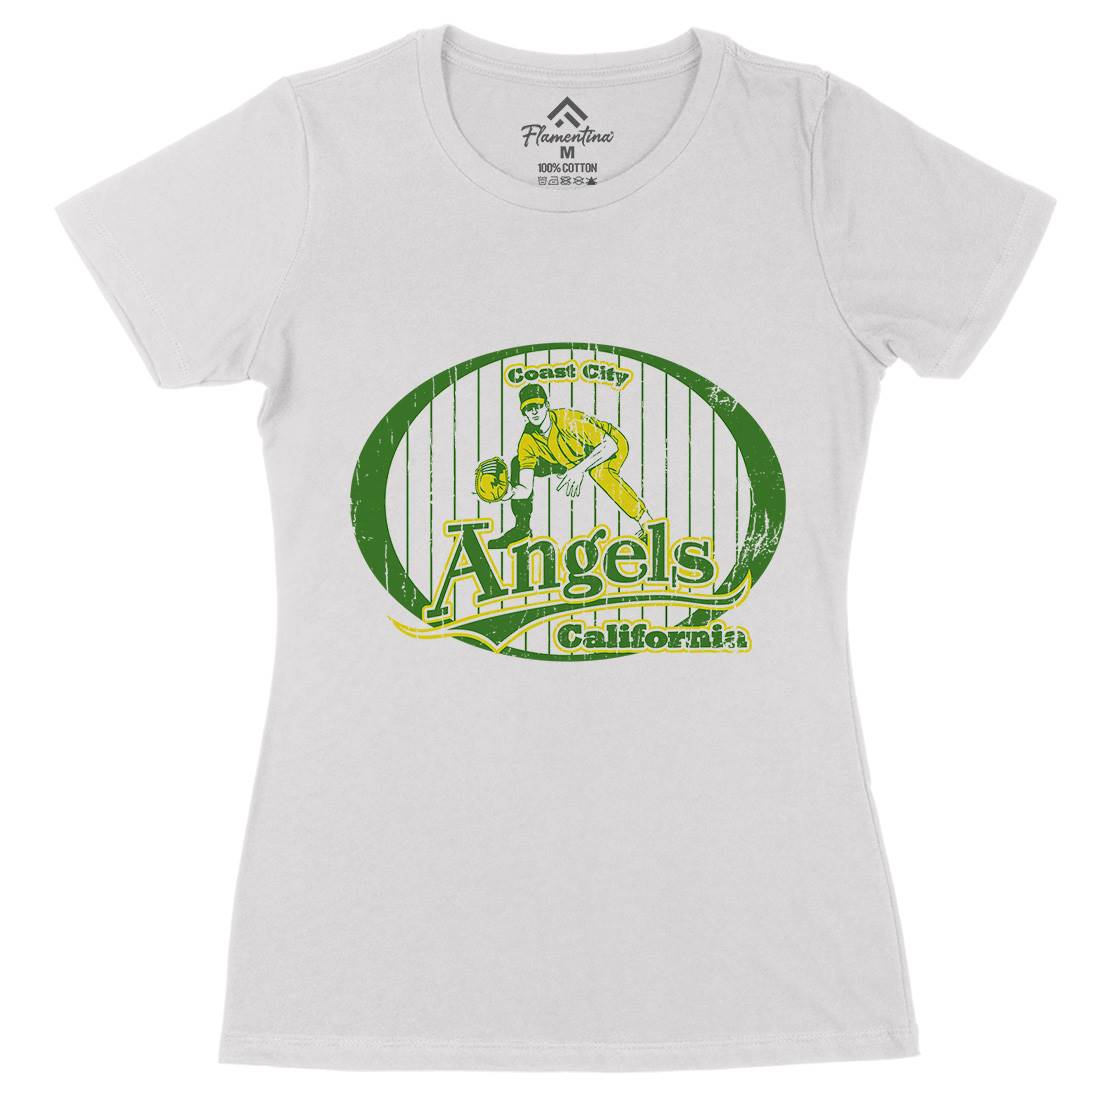 Coast City Angels Womens Organic Crew Neck T-Shirt Sport D129